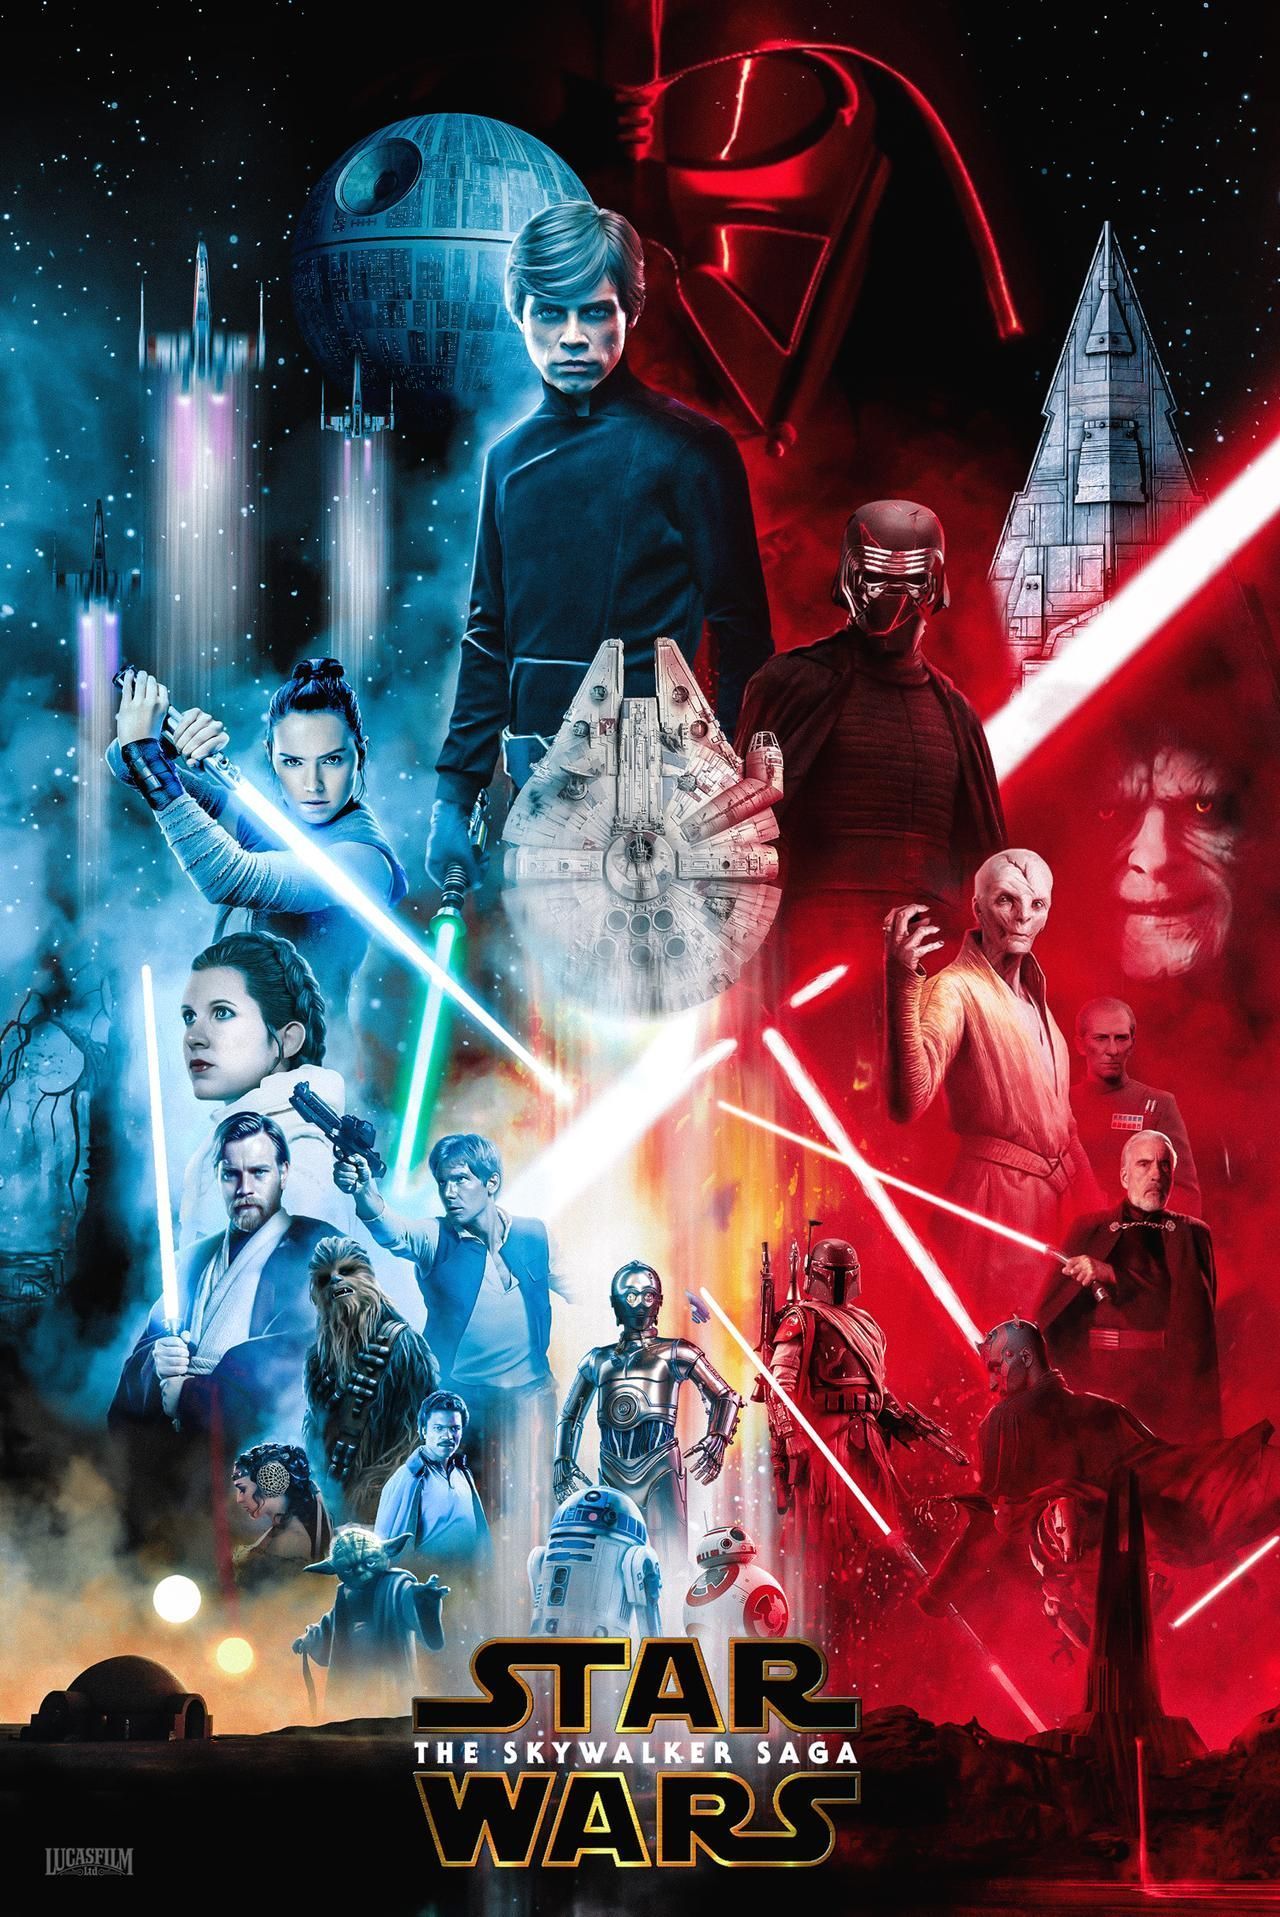 Star Wars: The Skywalker Saga. Star wars movies posters, Star wars background, Star wars picture